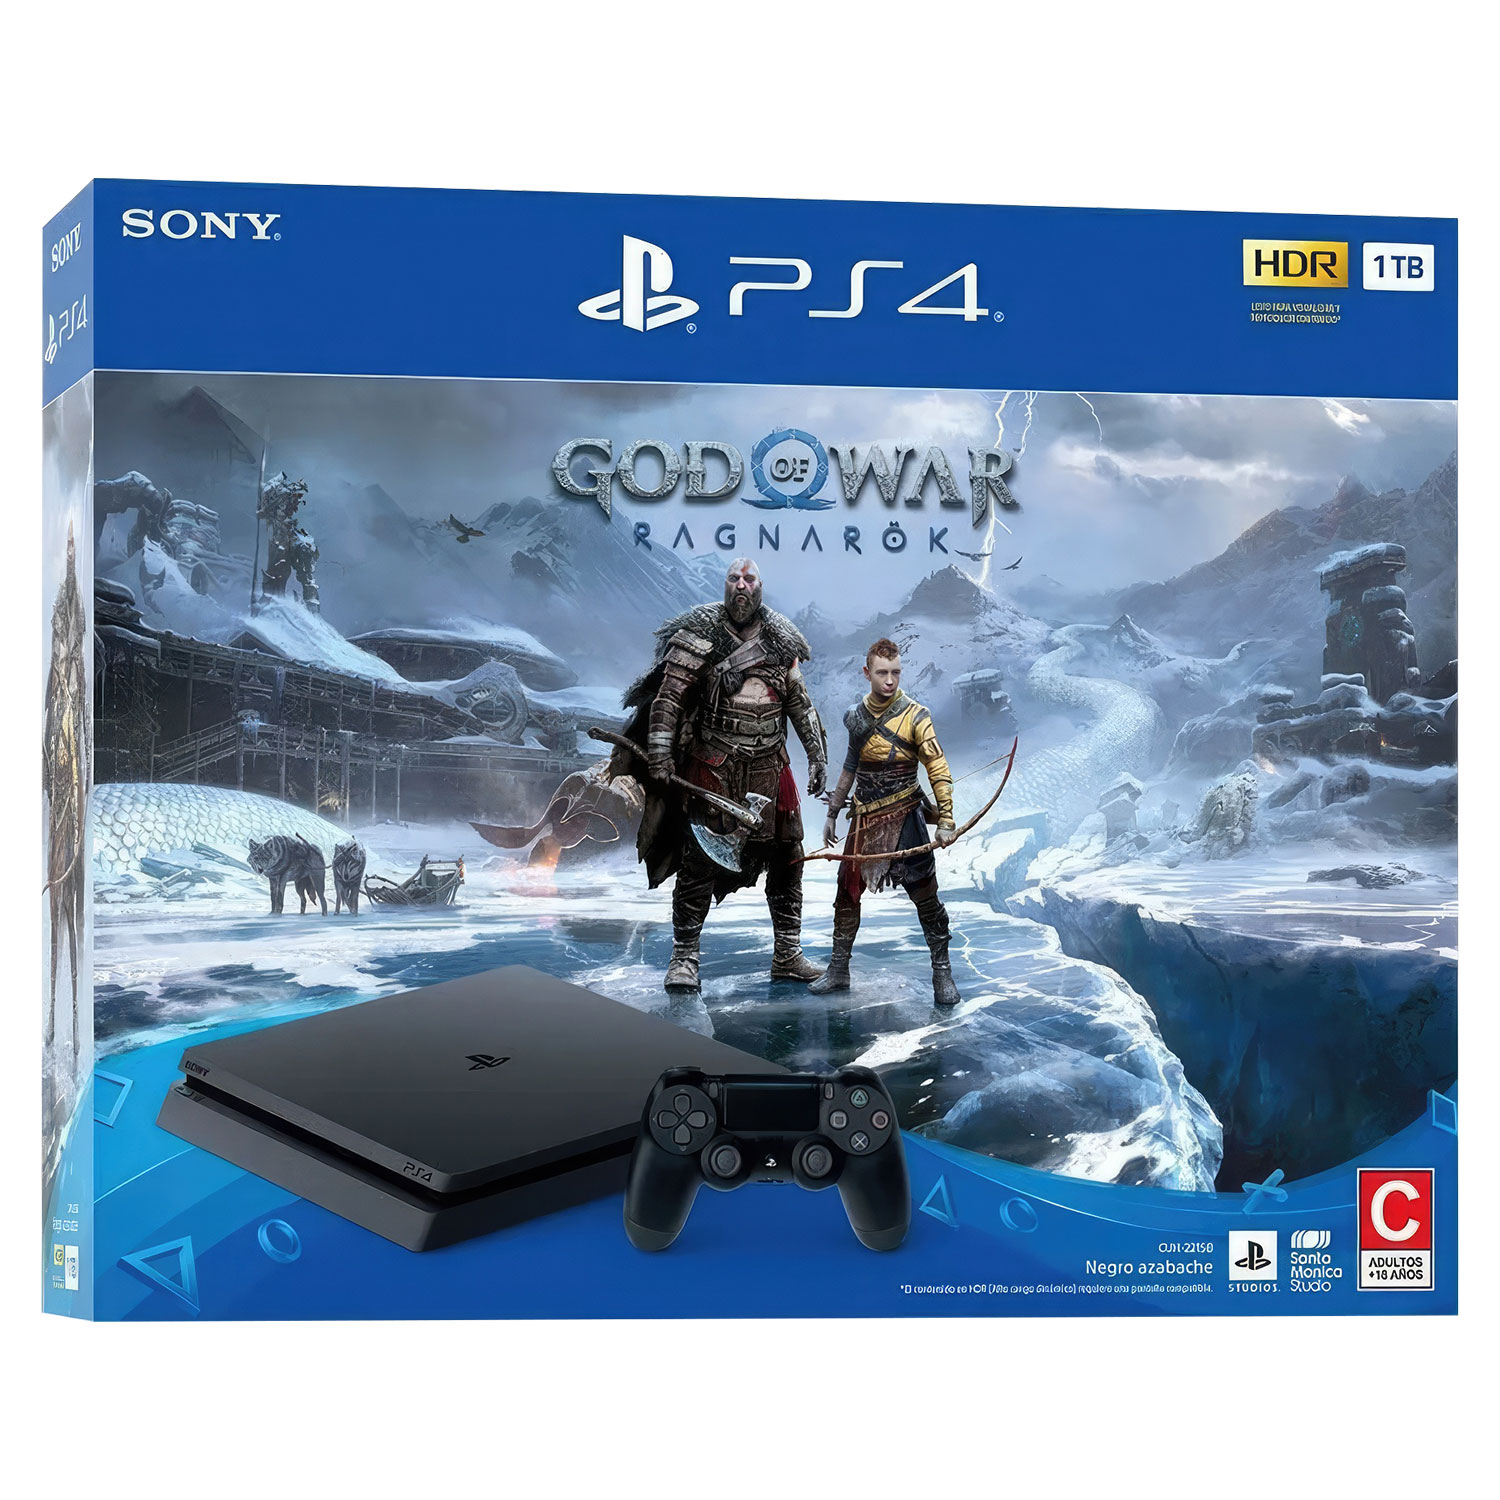  God of War - PlayStation 4 (PS4) : Video Games